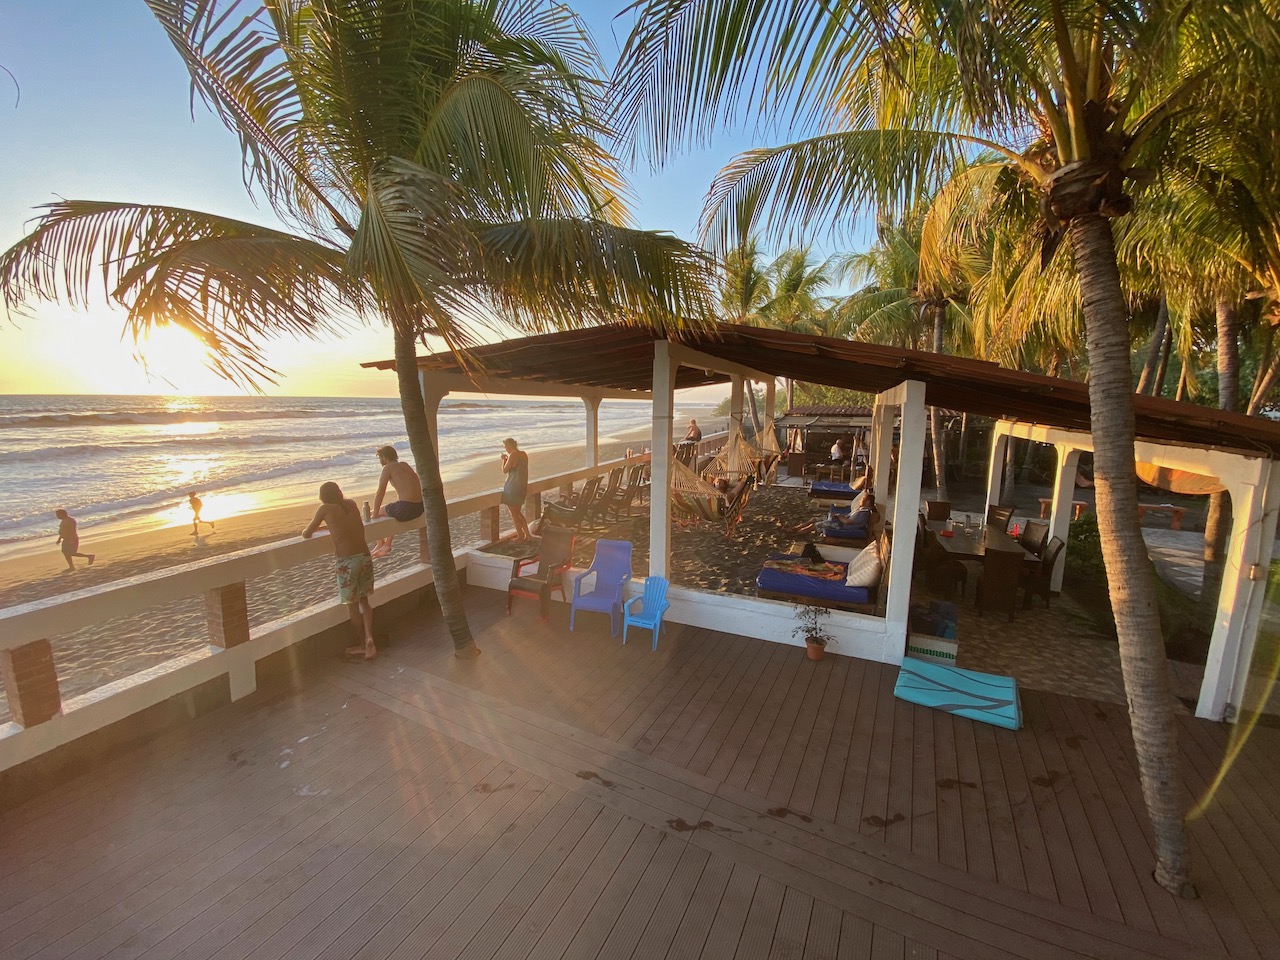 SOLID Surf Nicaragua